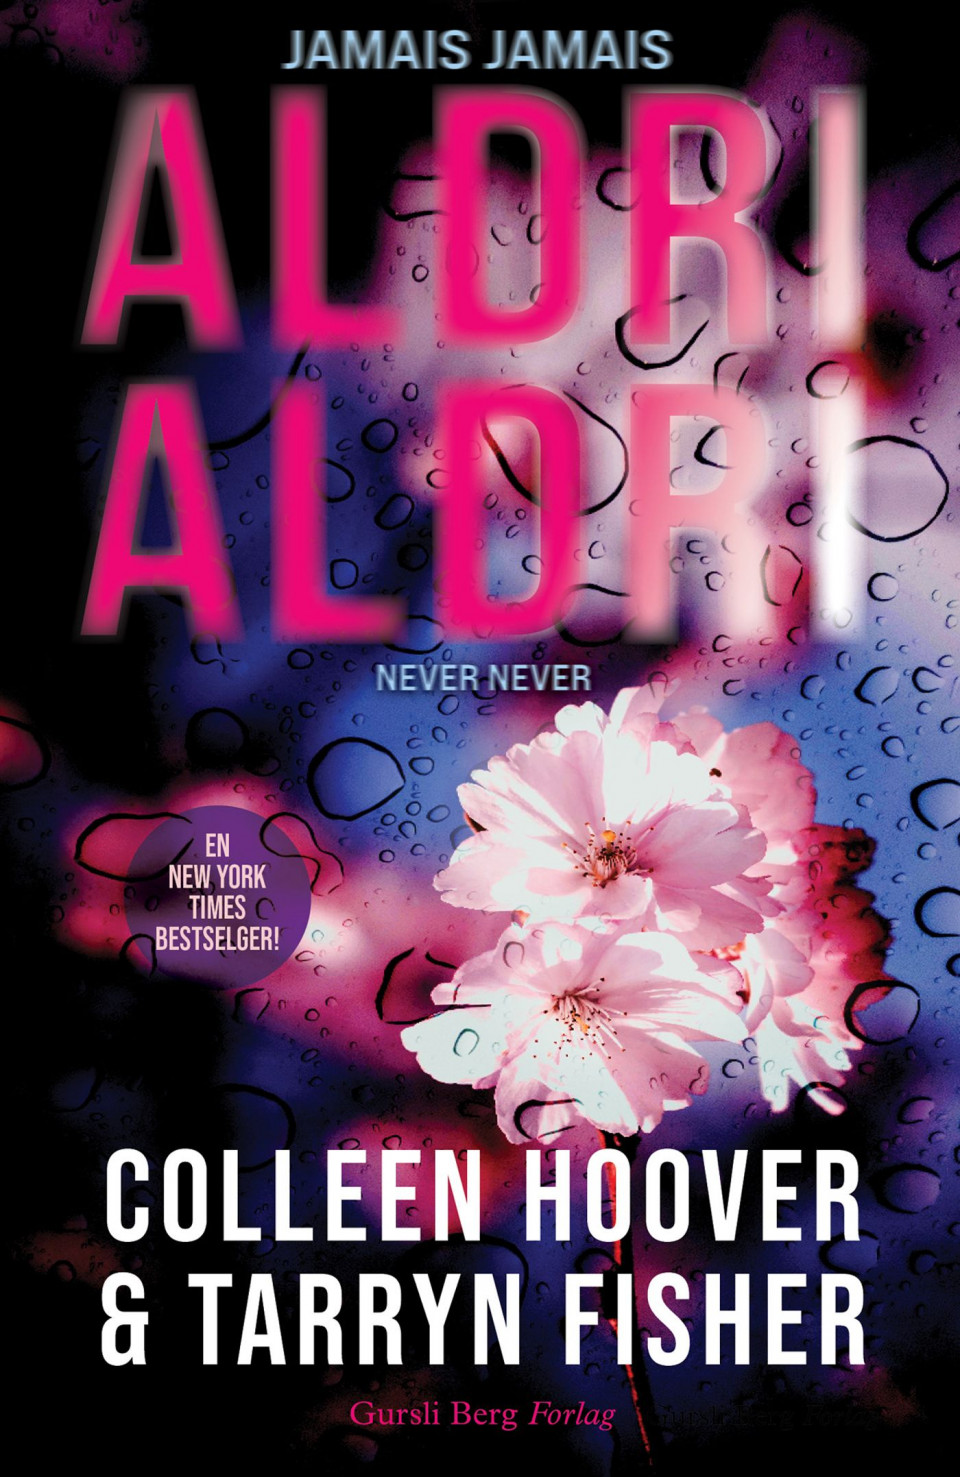 Nunca jamais by Colleen Hoover, Tarryn Fisher